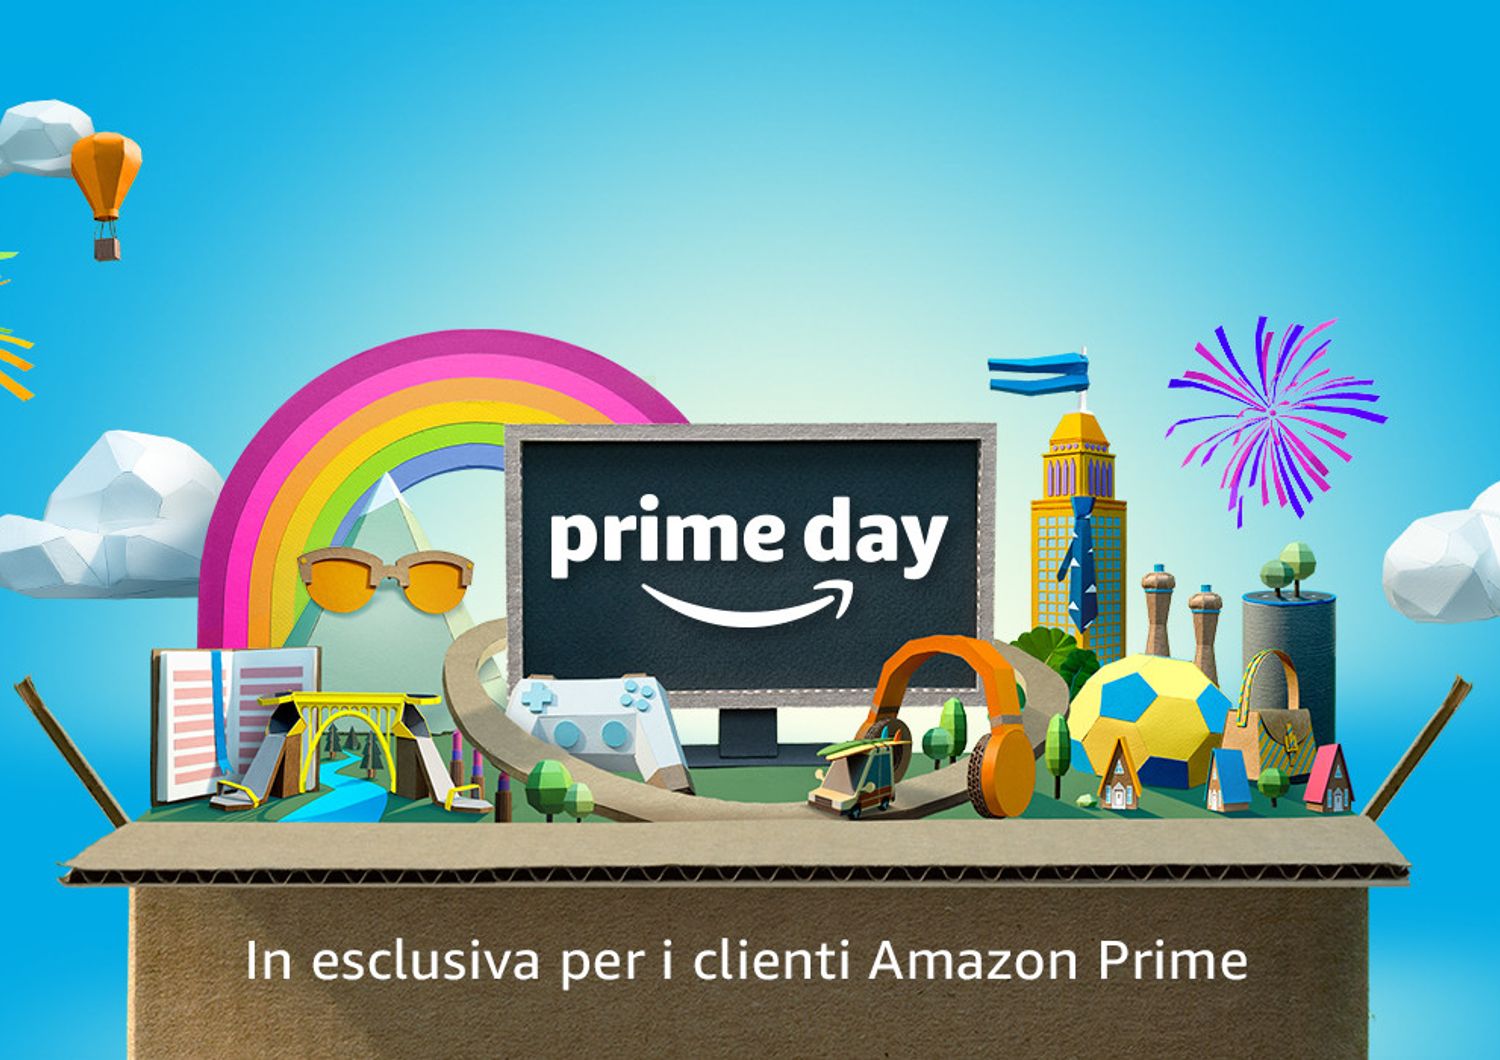 &nbsp;Amazon Prime Day